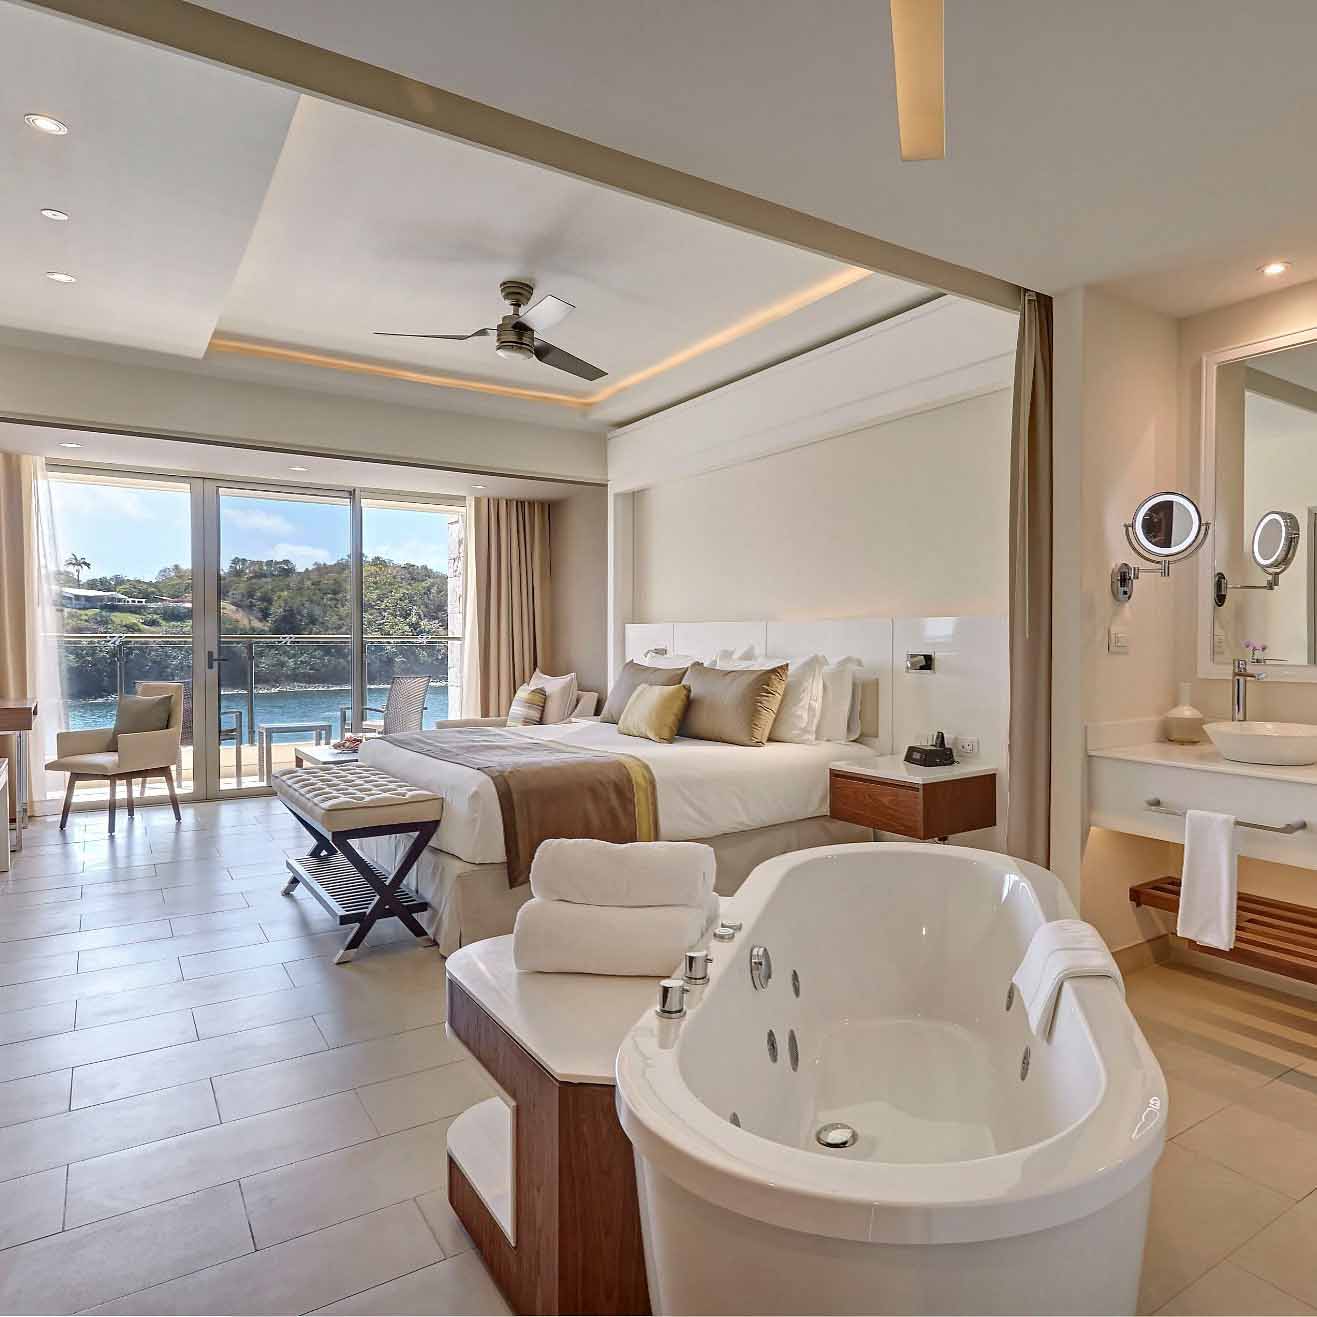 Royalton honeymoon suite with bathtub